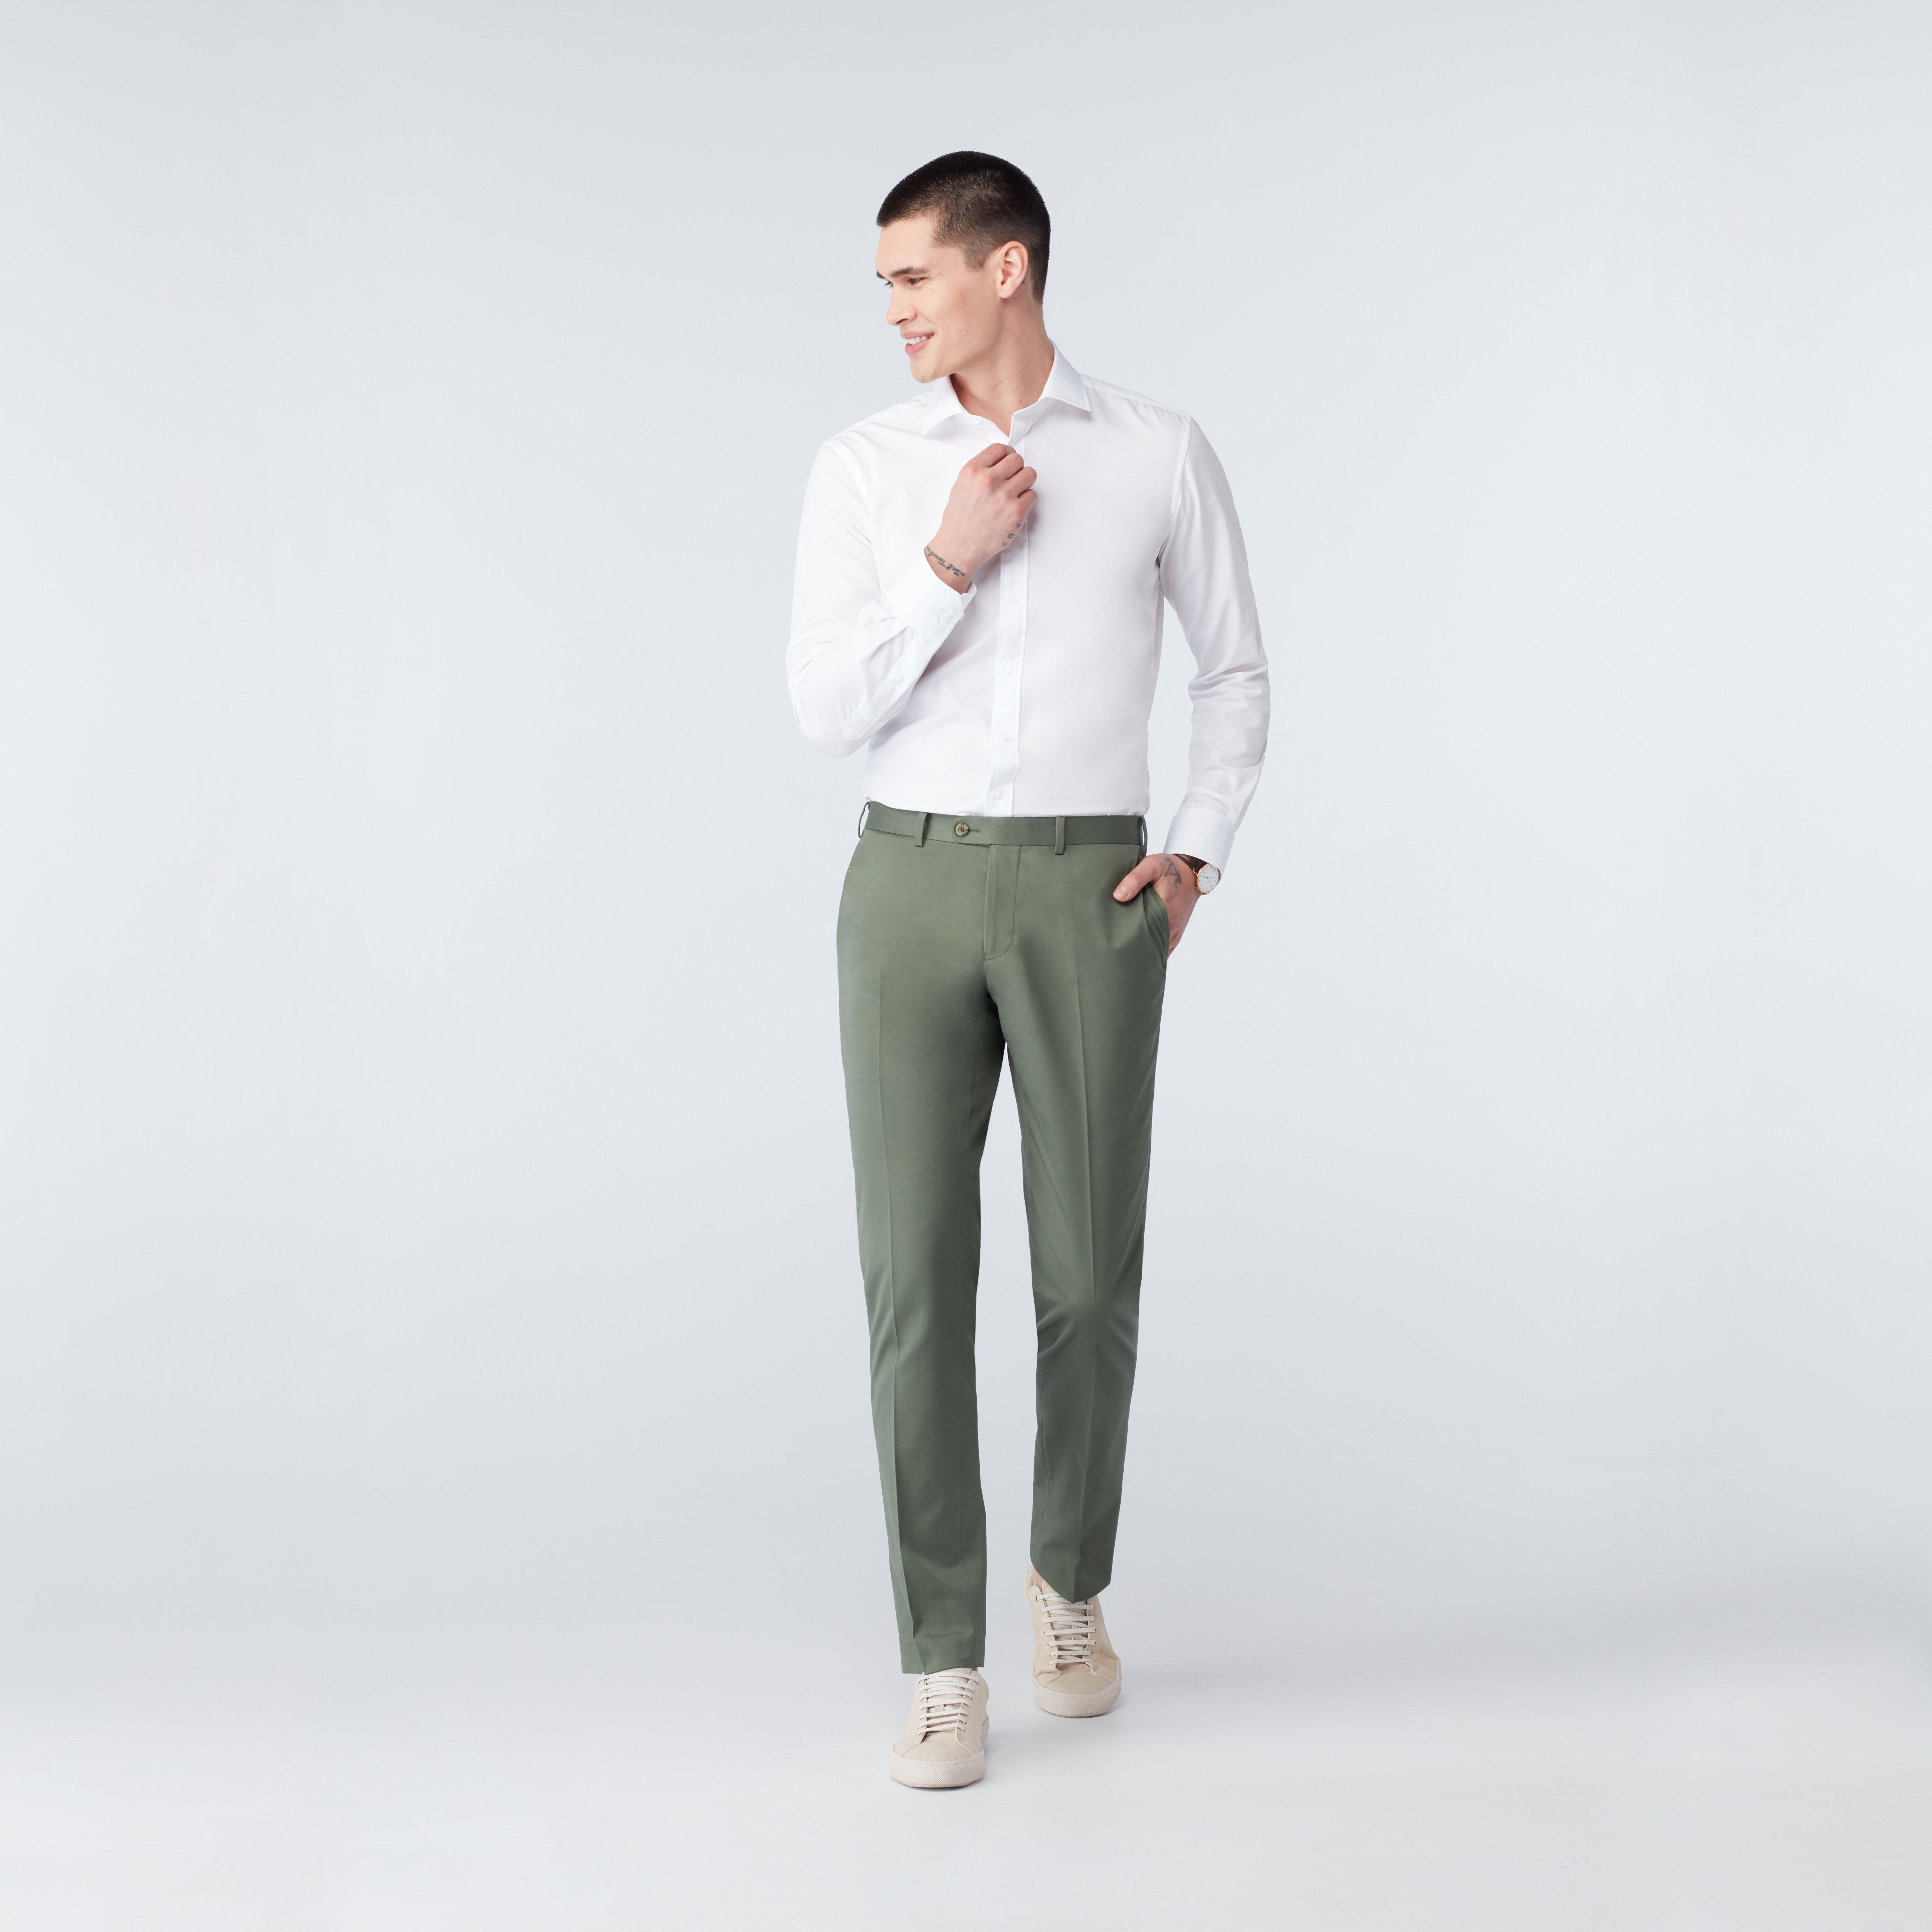 Kundan Men Poly-viscose Blended Olive Green Formal Trouser ( Pack Of 1  Trouser ), Suit trousers, Business slacks, Formal slacks, Chinos Set, Men  Khaki Set - Blog Spud, Tiruppur | ID: 2850429371933